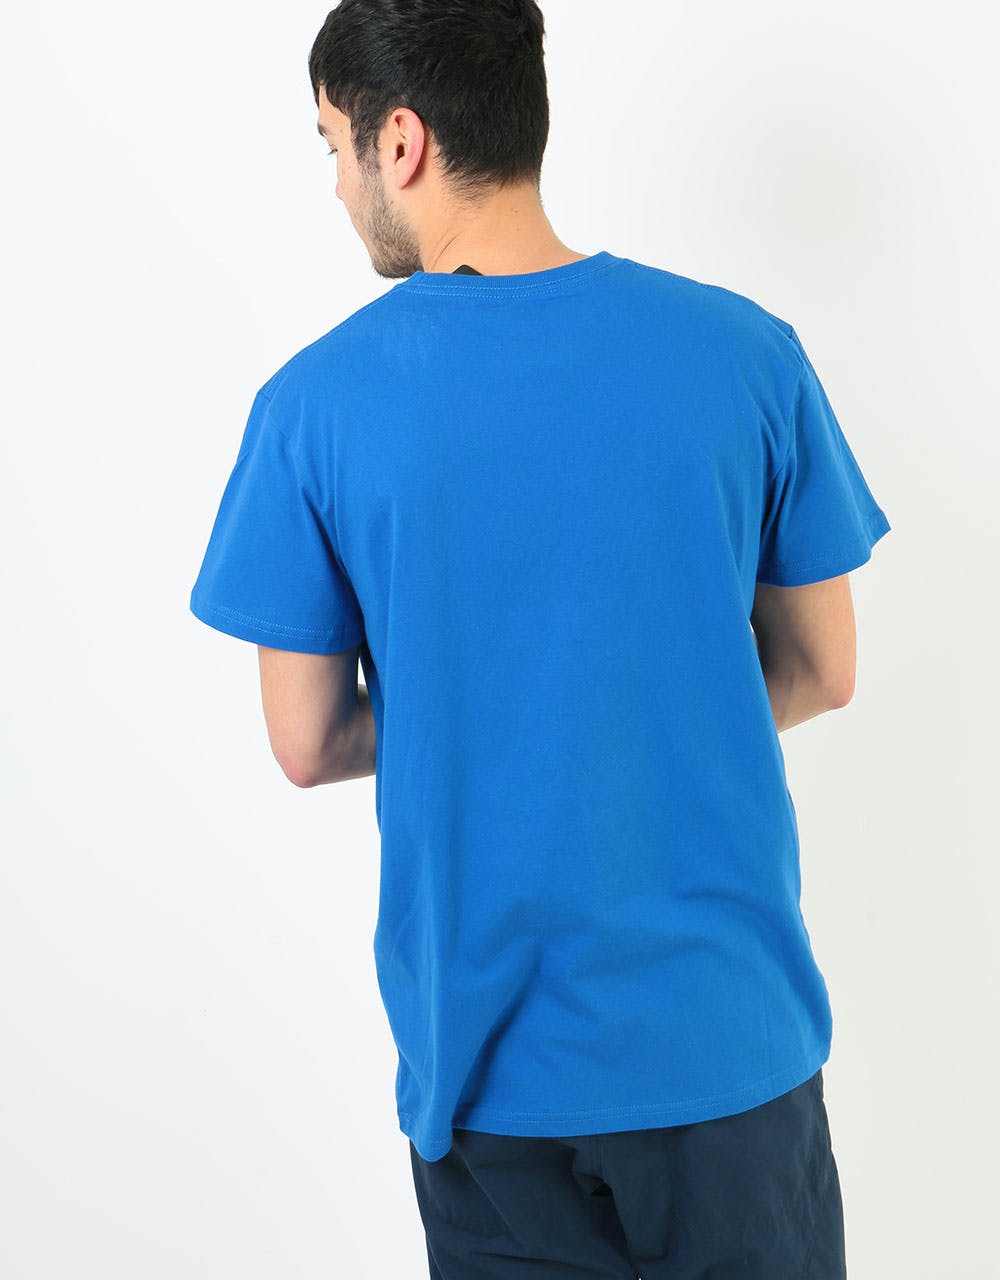 DC Square Star T-Shirt - Nautical Blue/Orange Popsicle